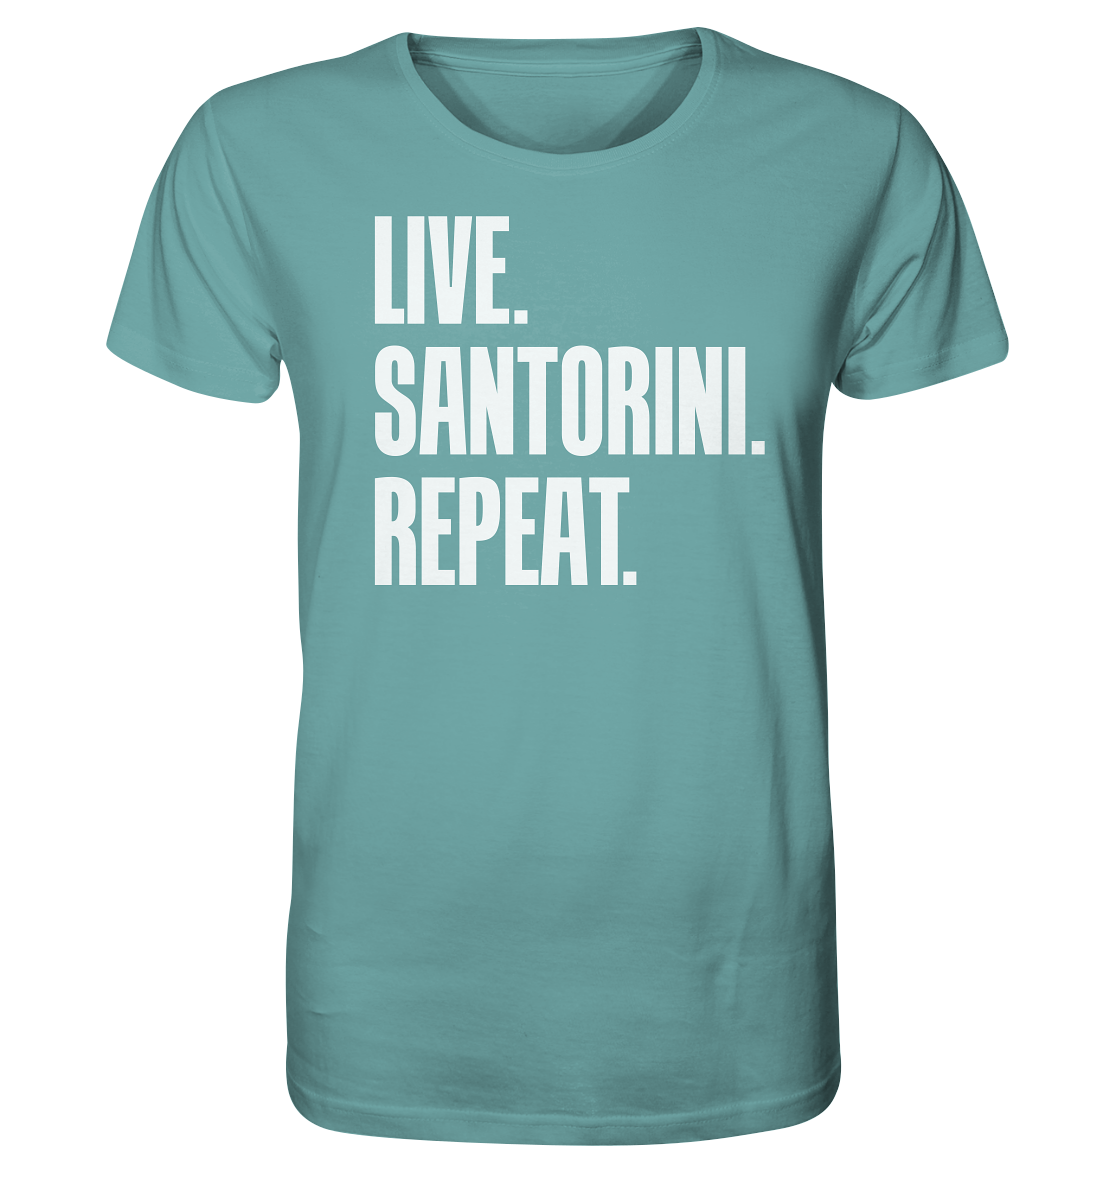 LIVE. SANTORINI. REPEAT. - Organic Shirt